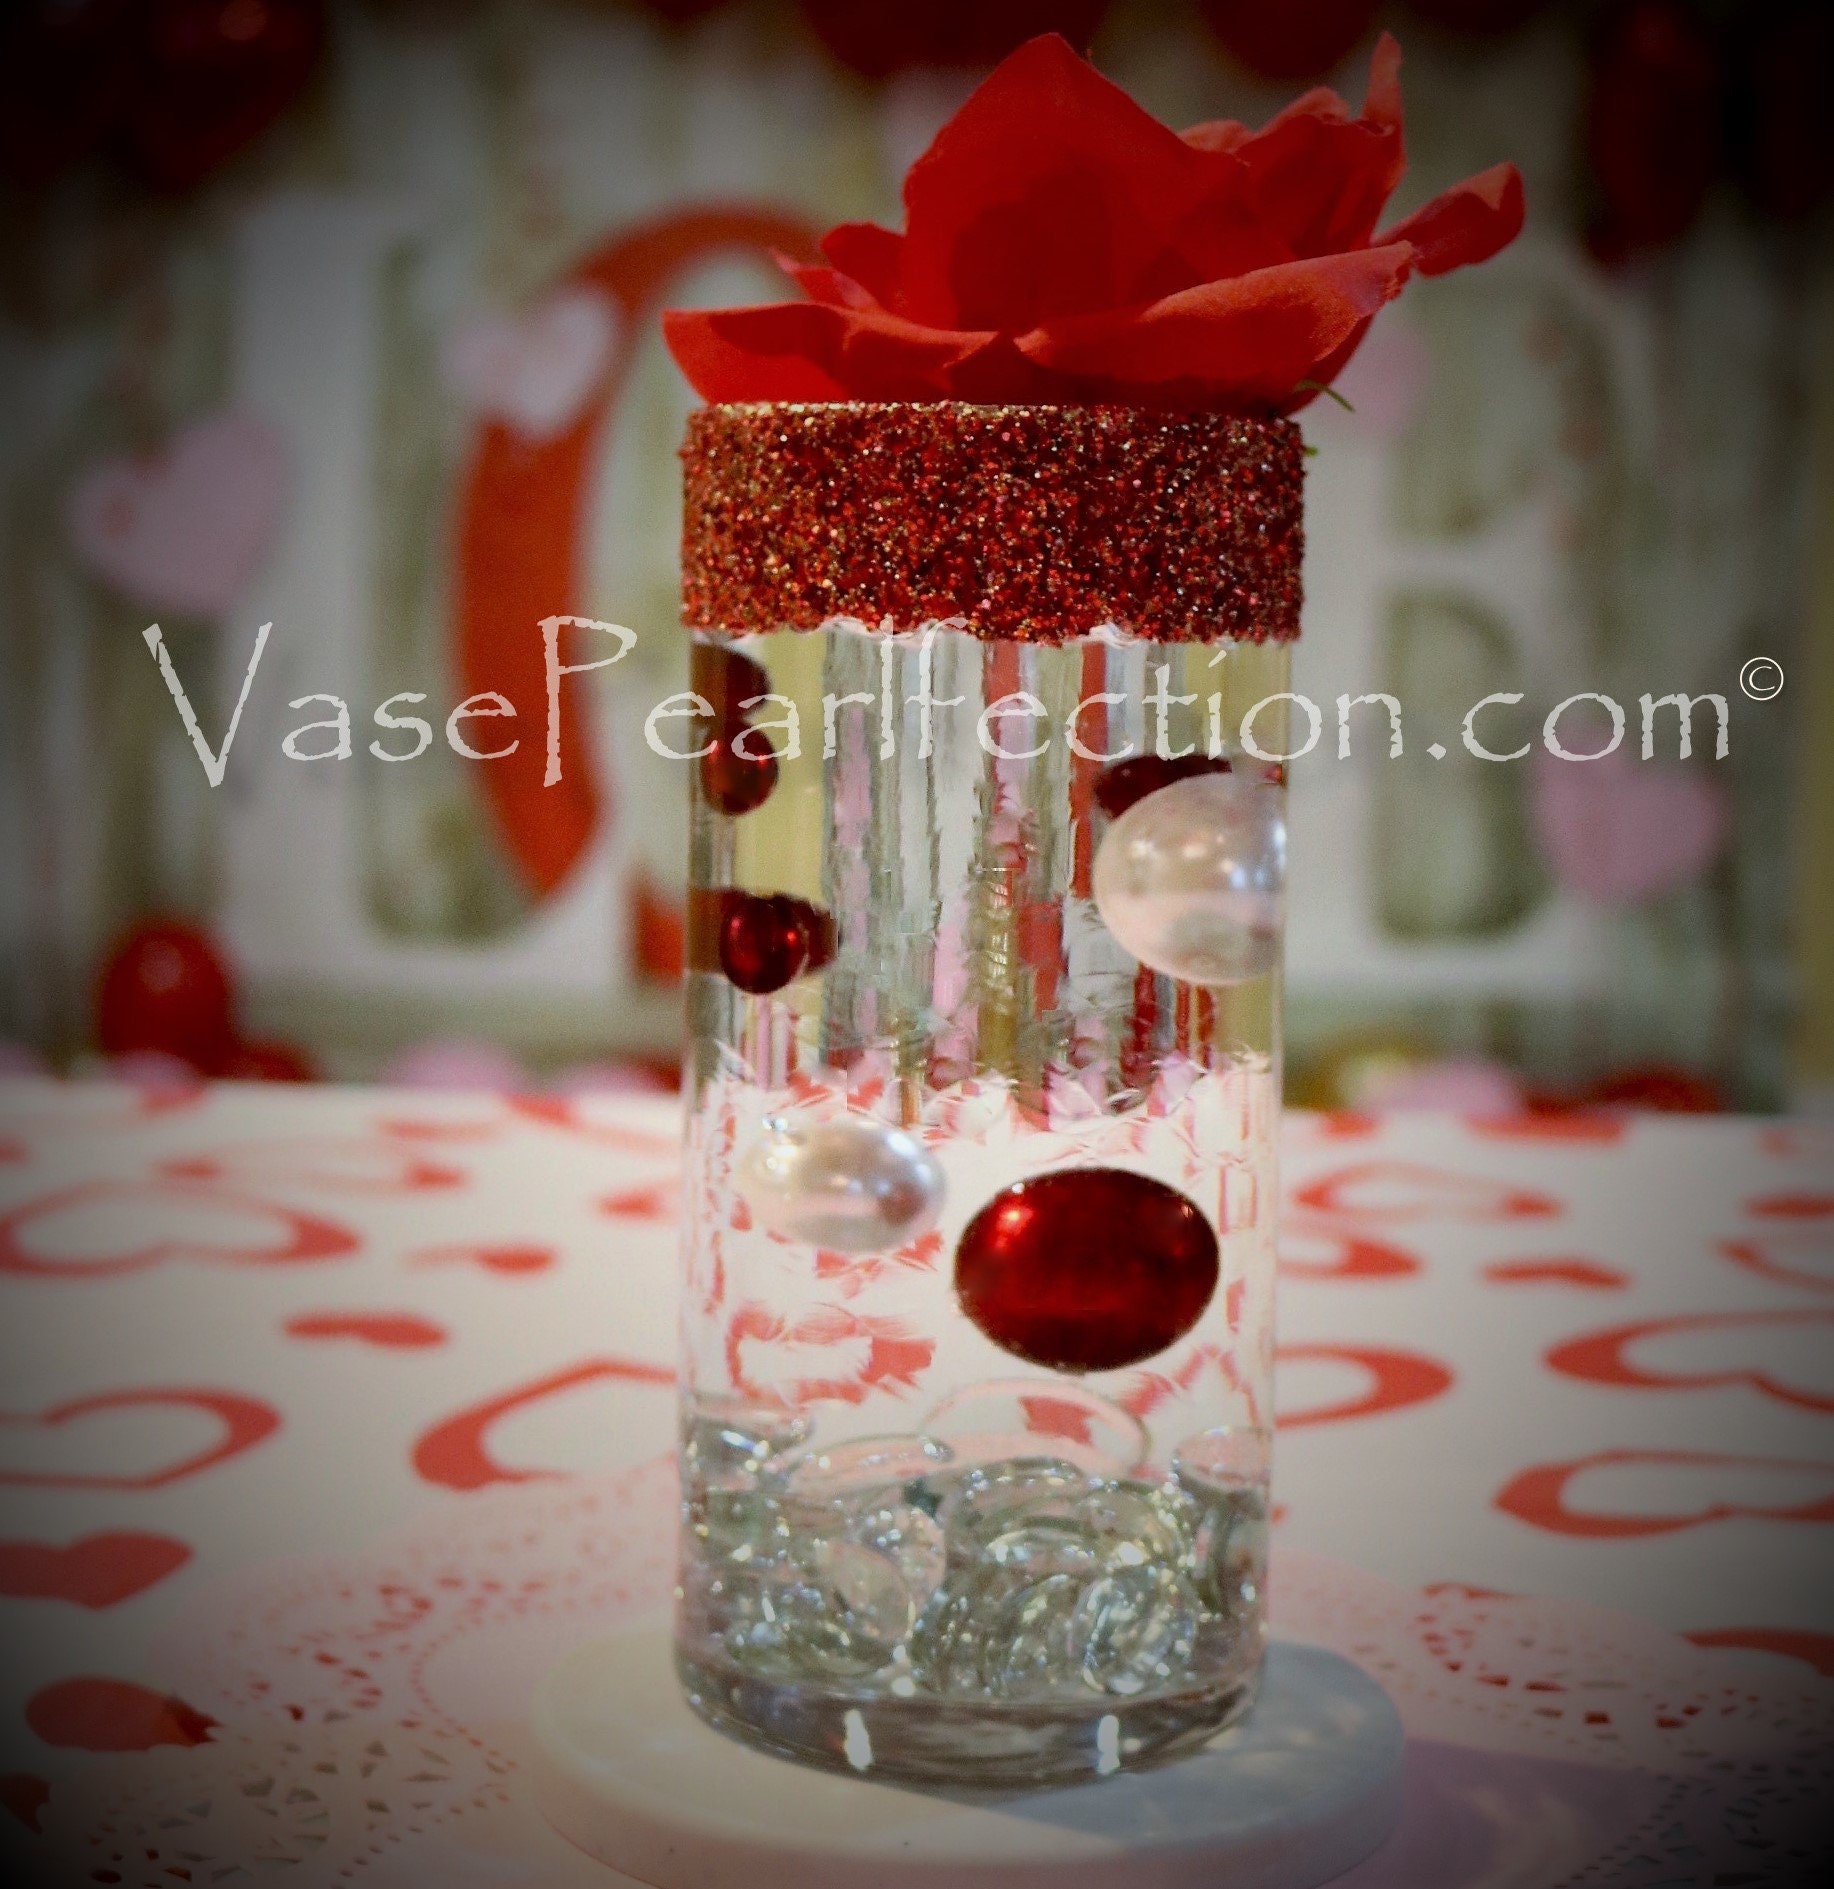 Thsue Christmas Vase Filler Beads Floating Pearls for Vases, Filler Floating Clear Water Gel Beads for Vases, Christmas Vase Filler Decor Home Party